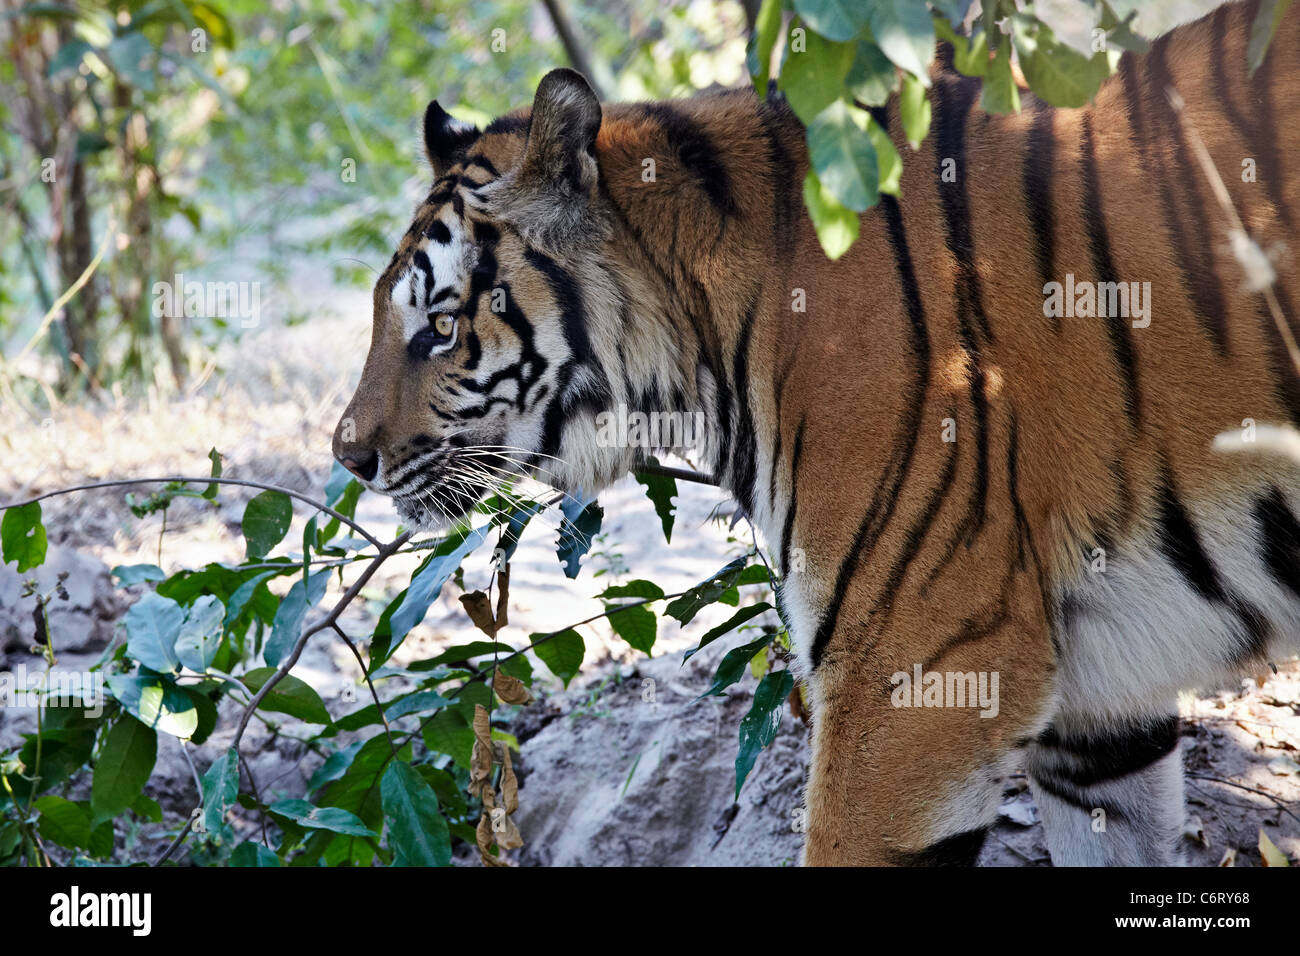 Prowling Asian tiger (Panthera tigris) in a natural jungle habitat. Thailand S. E. Asia Stock Photo